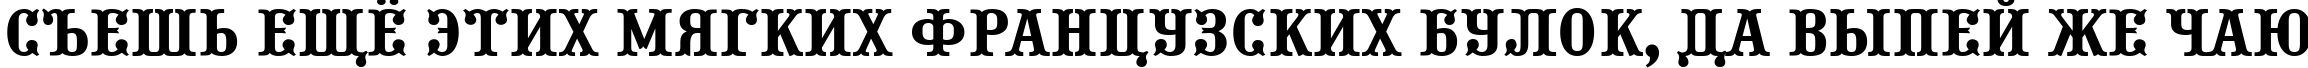 Пример написания шрифтом a_Presentum текста на русском